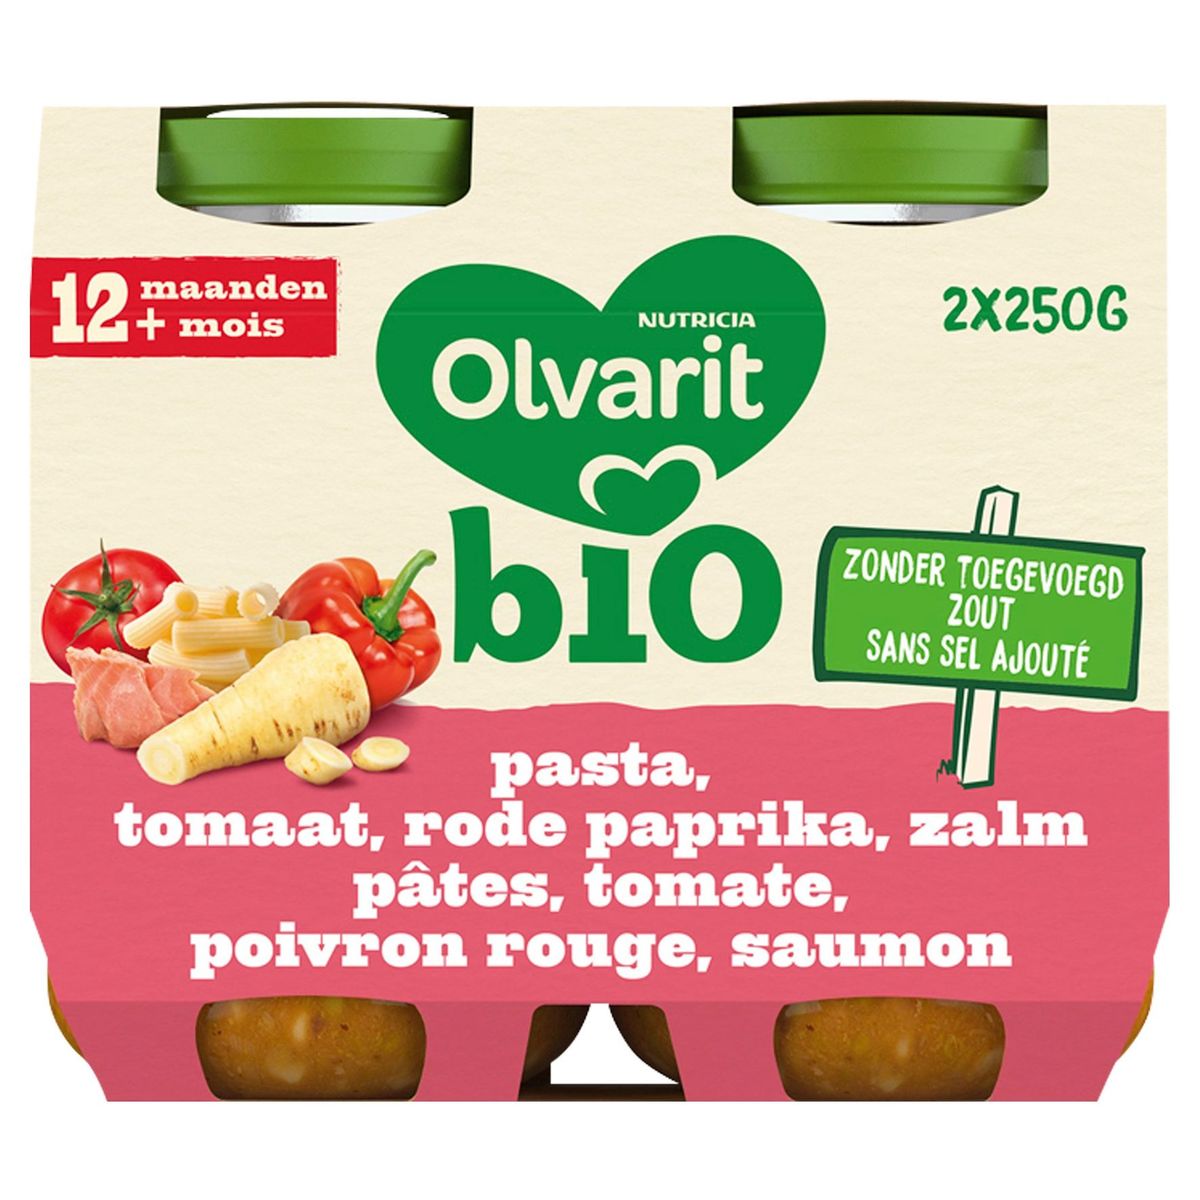 Olvarit Bio Pasta, Tomaat, Rode Paprika, Zalm 12+ Maanden 2 x 250 g